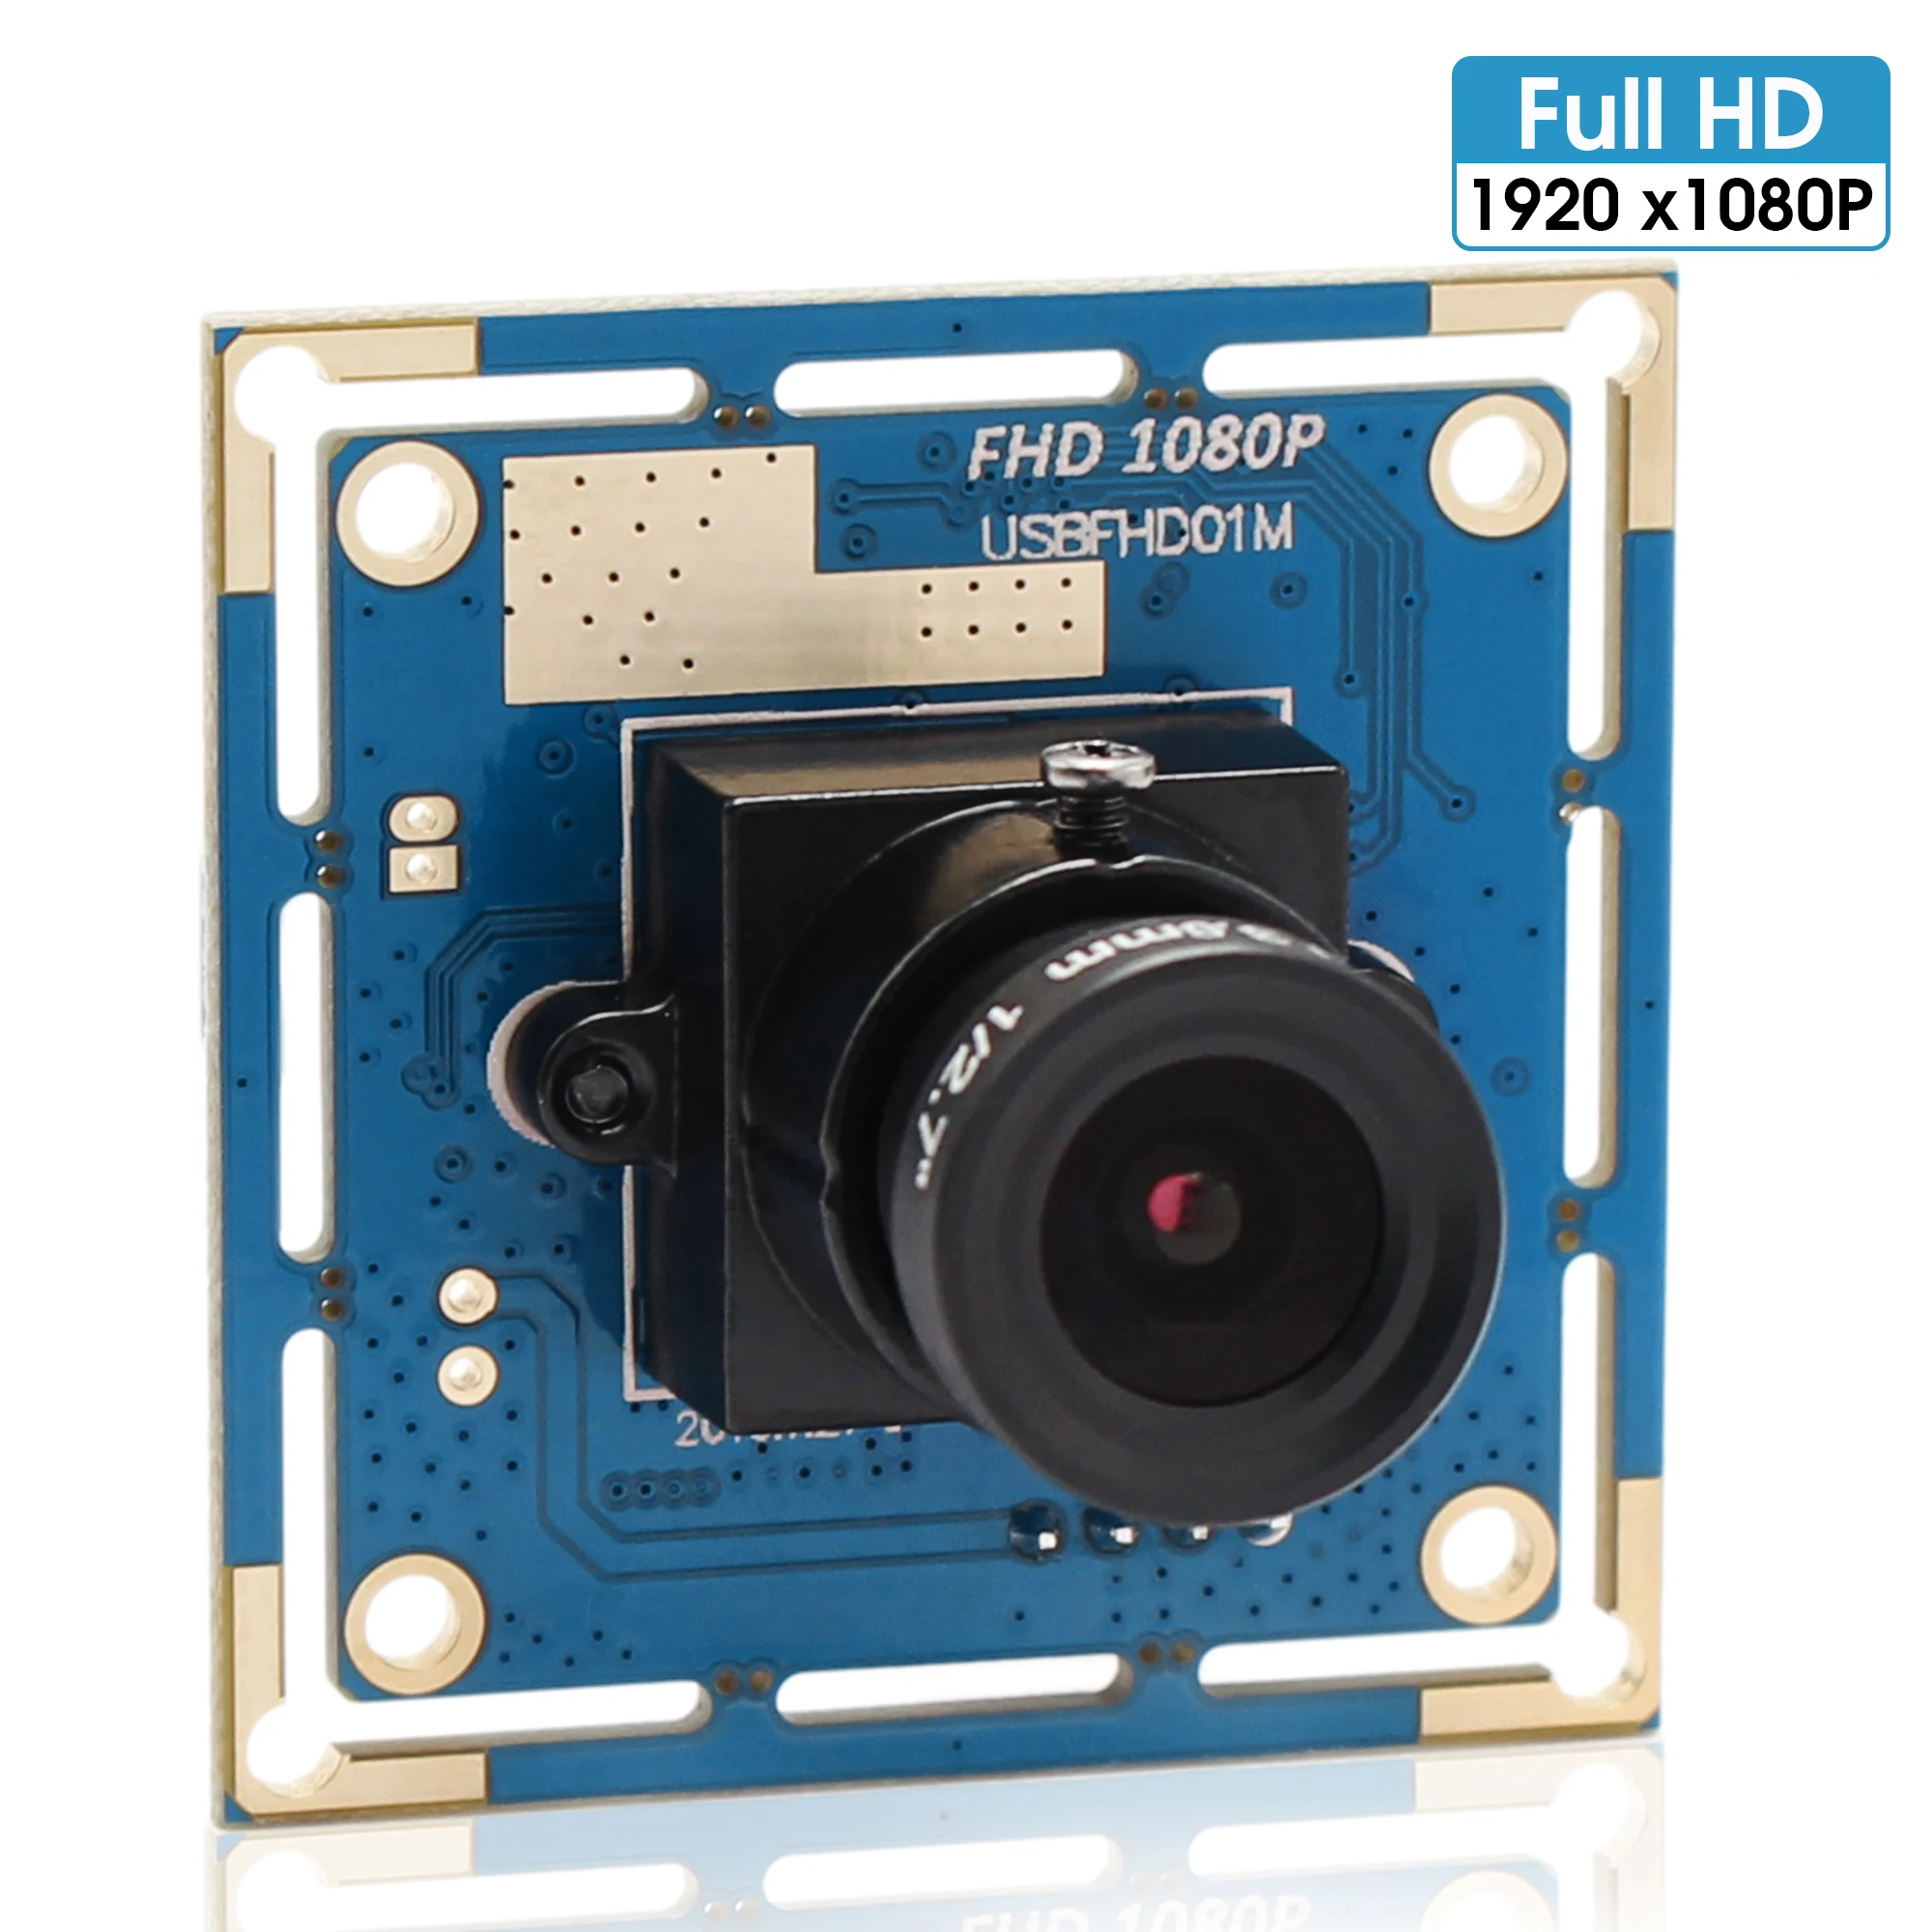 

1080p Full Hd MJPEG 30fps/60fps/100fps High Speed CMOS OV2710 No Distortion Mini CCTV Android Linux UVC Webcam Usb Camera Module